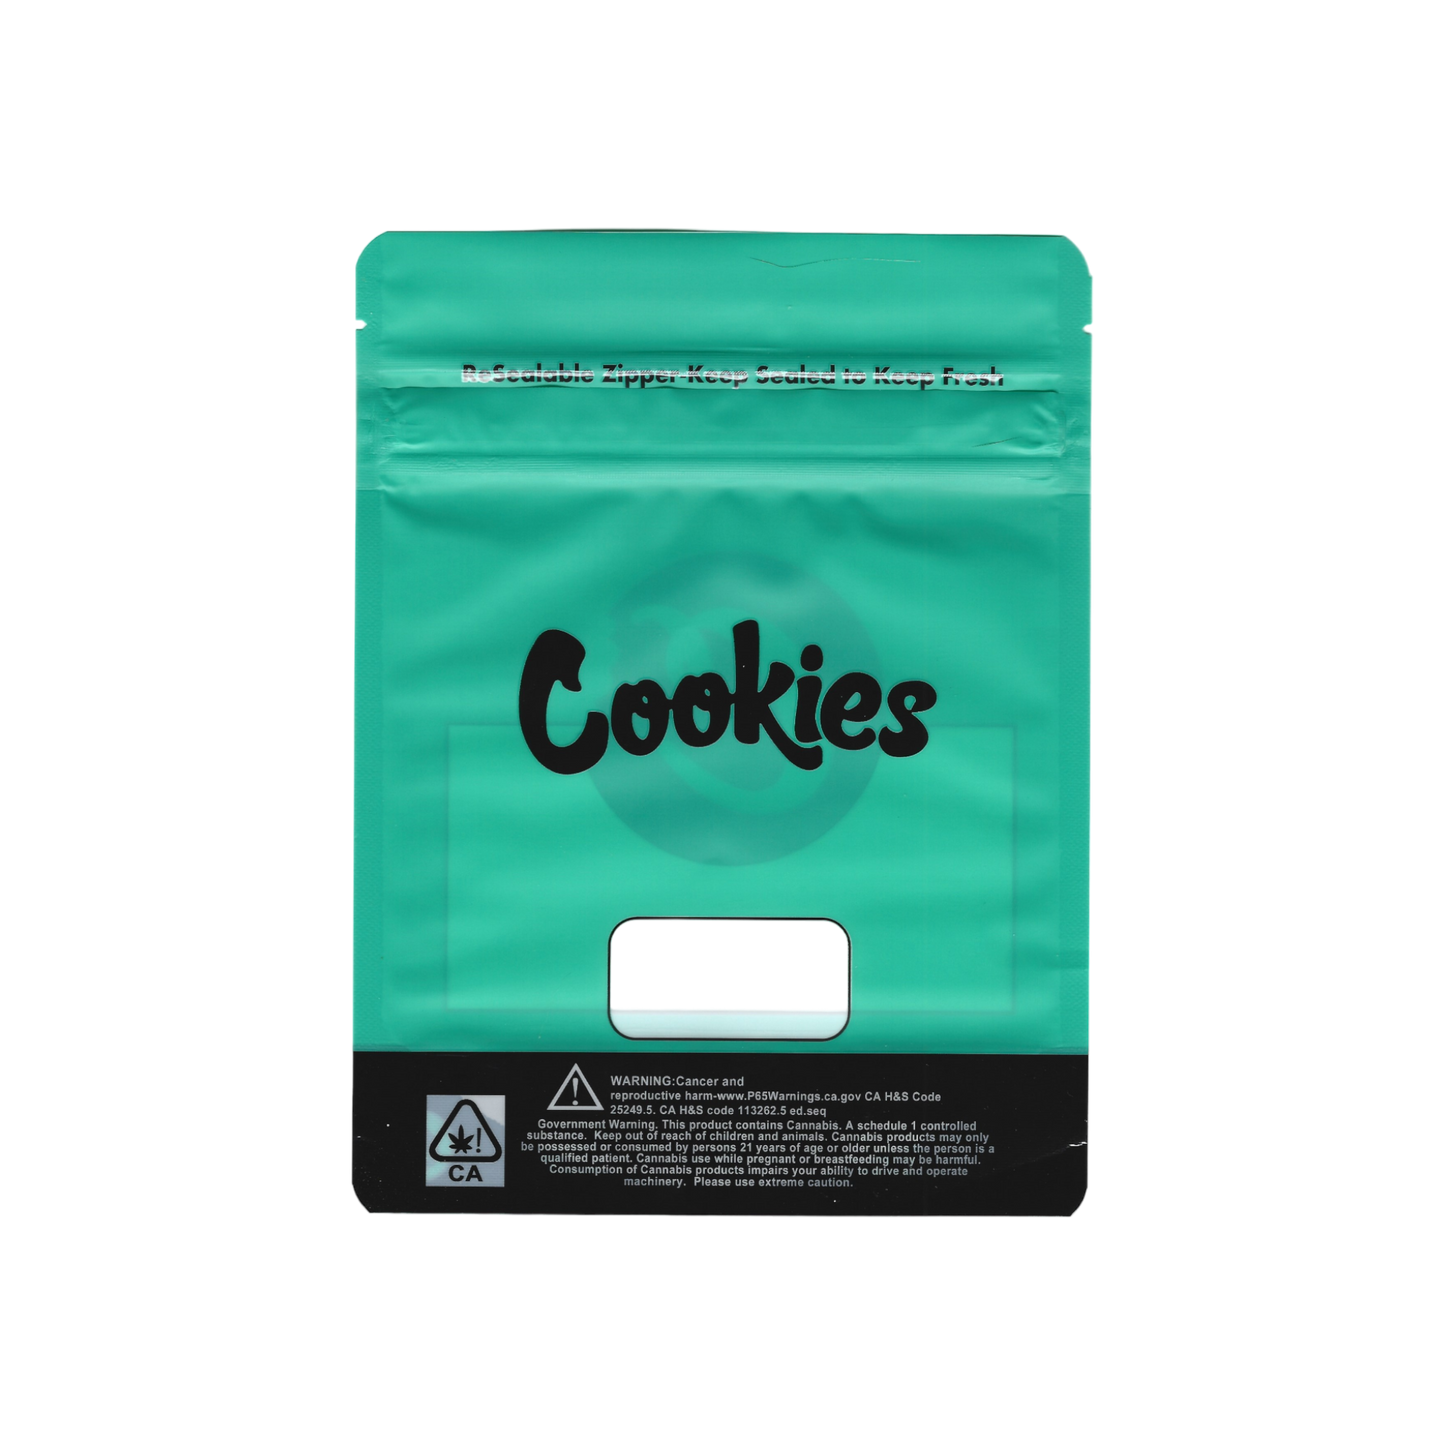 10x Cookies green Mylar Bag 28g/1oz. - Leer